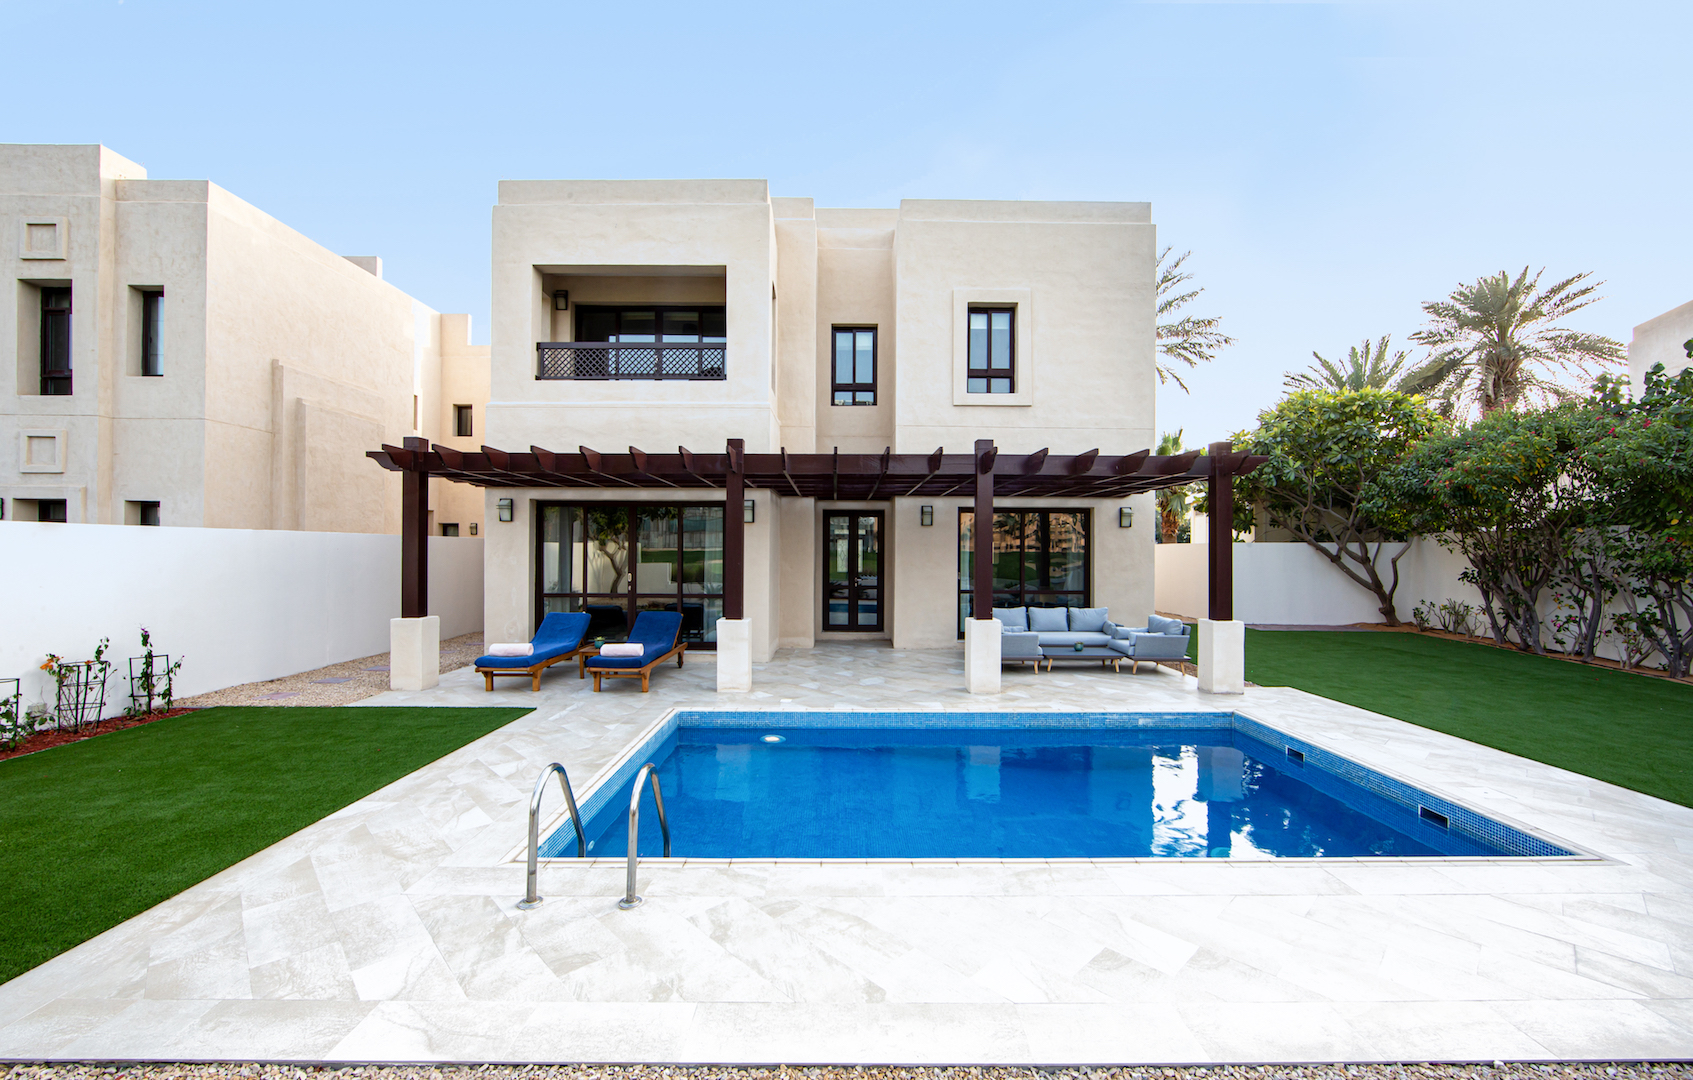  Luxury Villas in Dubai for Your Next Vacation